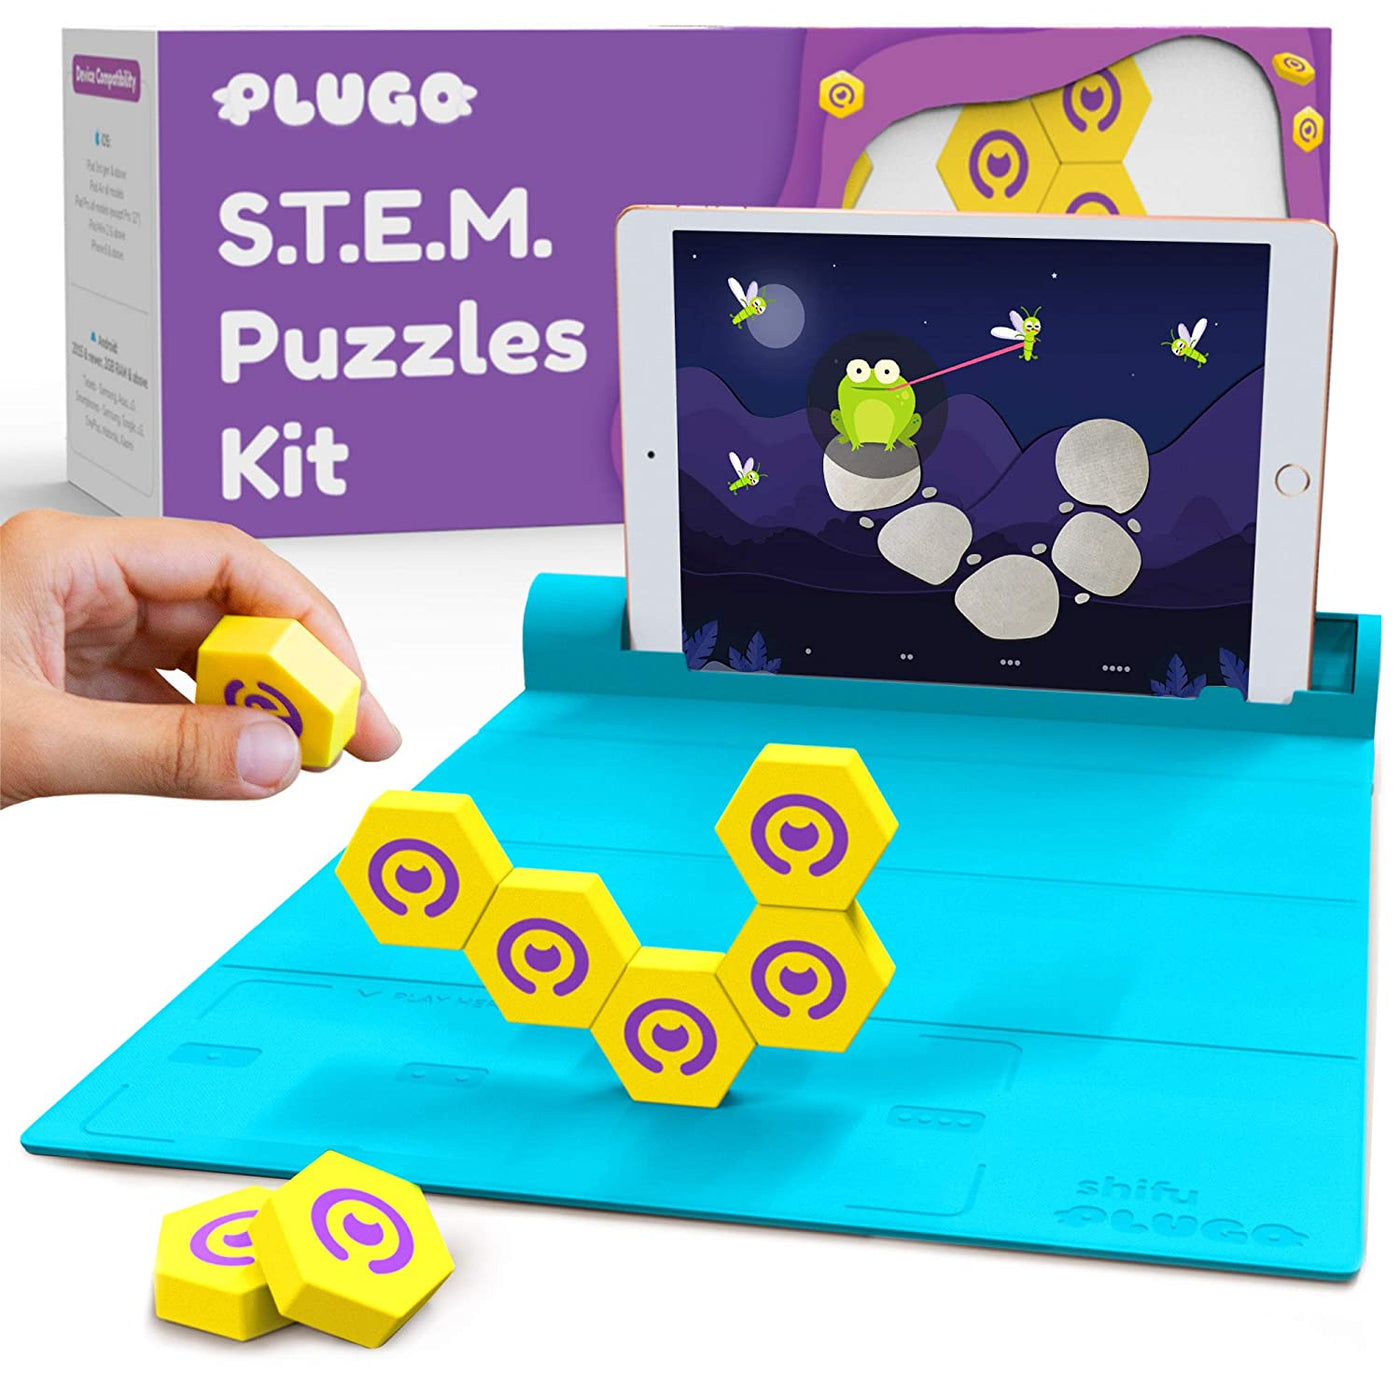 Plugo Link - Build And Solve S.T.E.M. Puzzles | PlayShifu